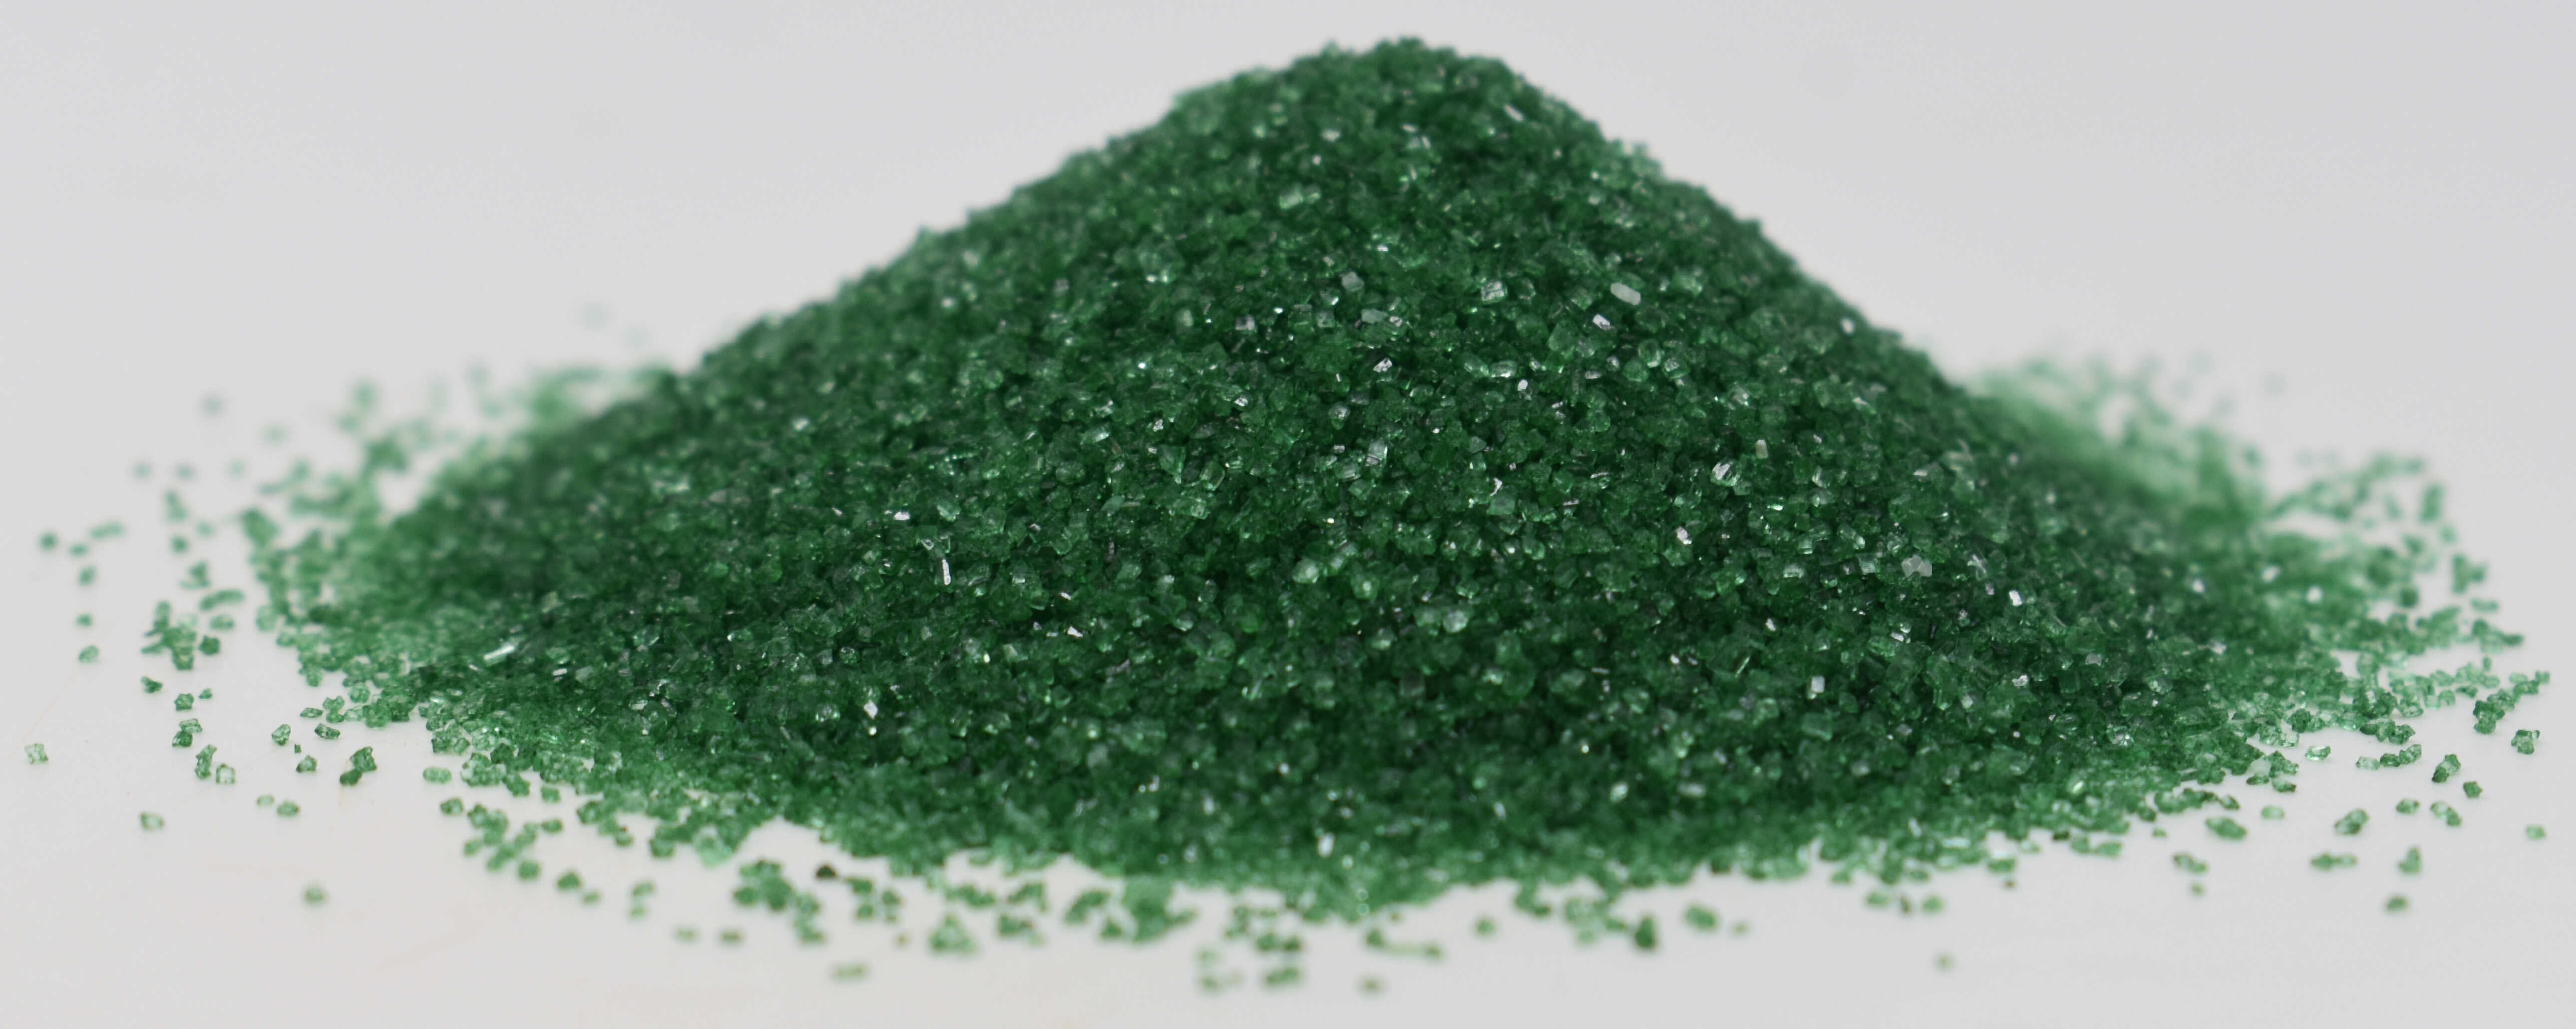 Green Sanding Sugar - Side Photo